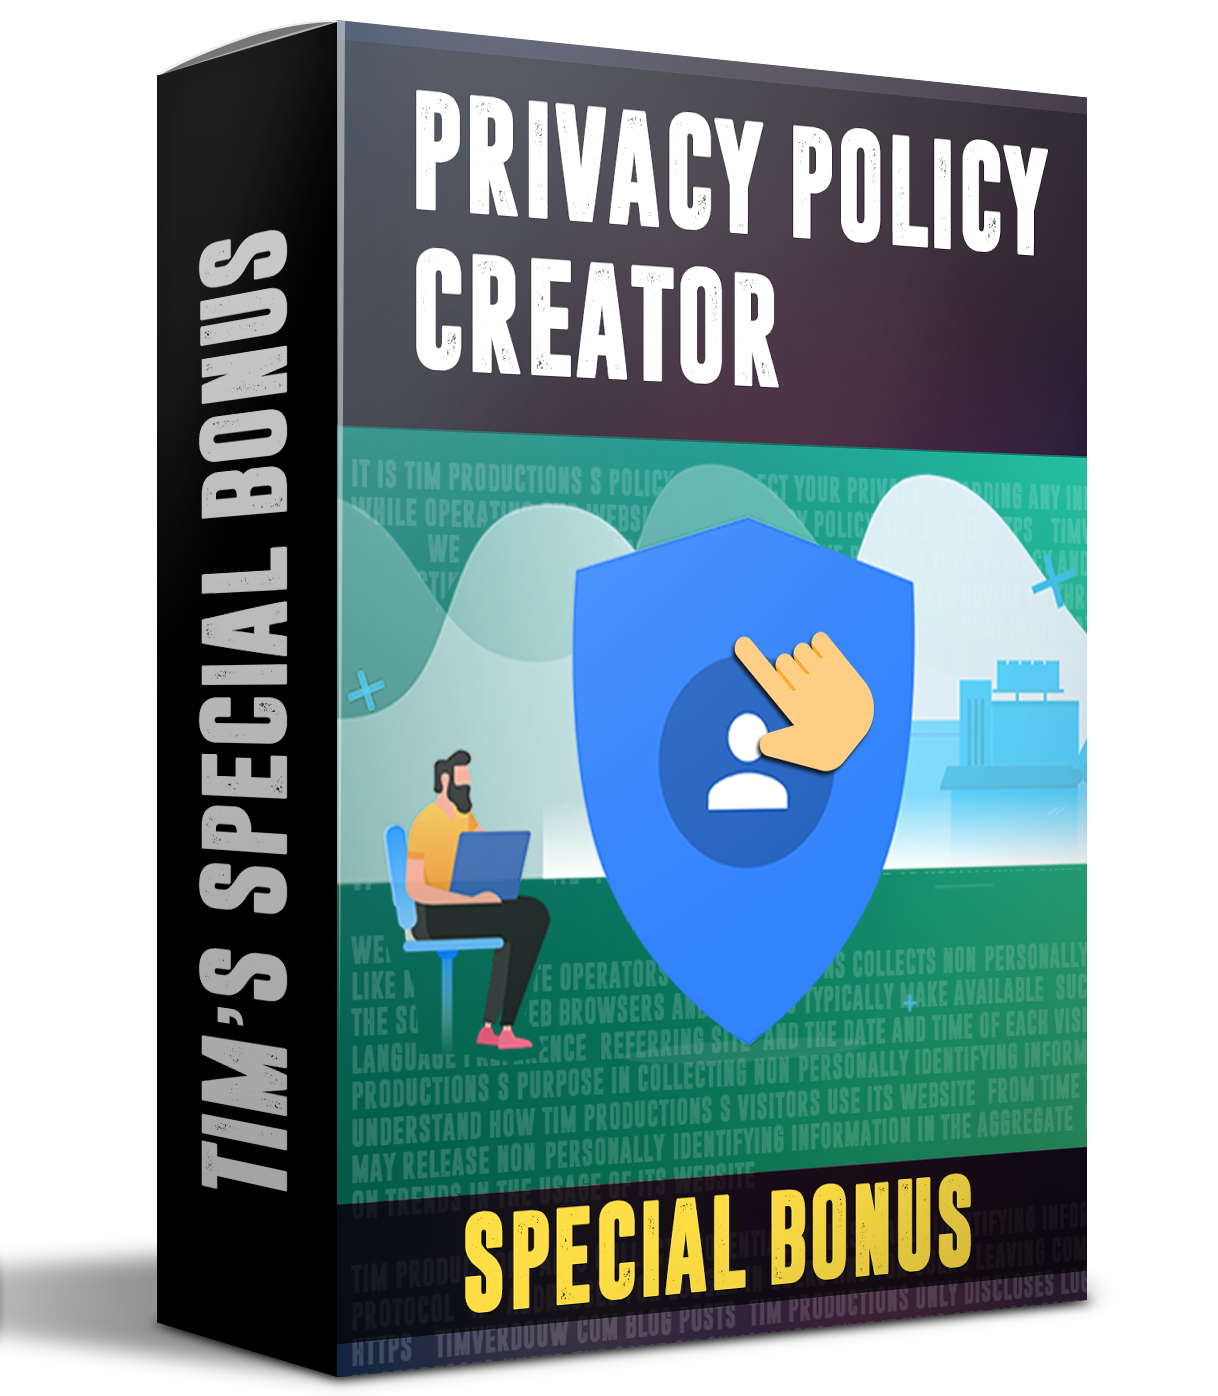 Privacy policy creator